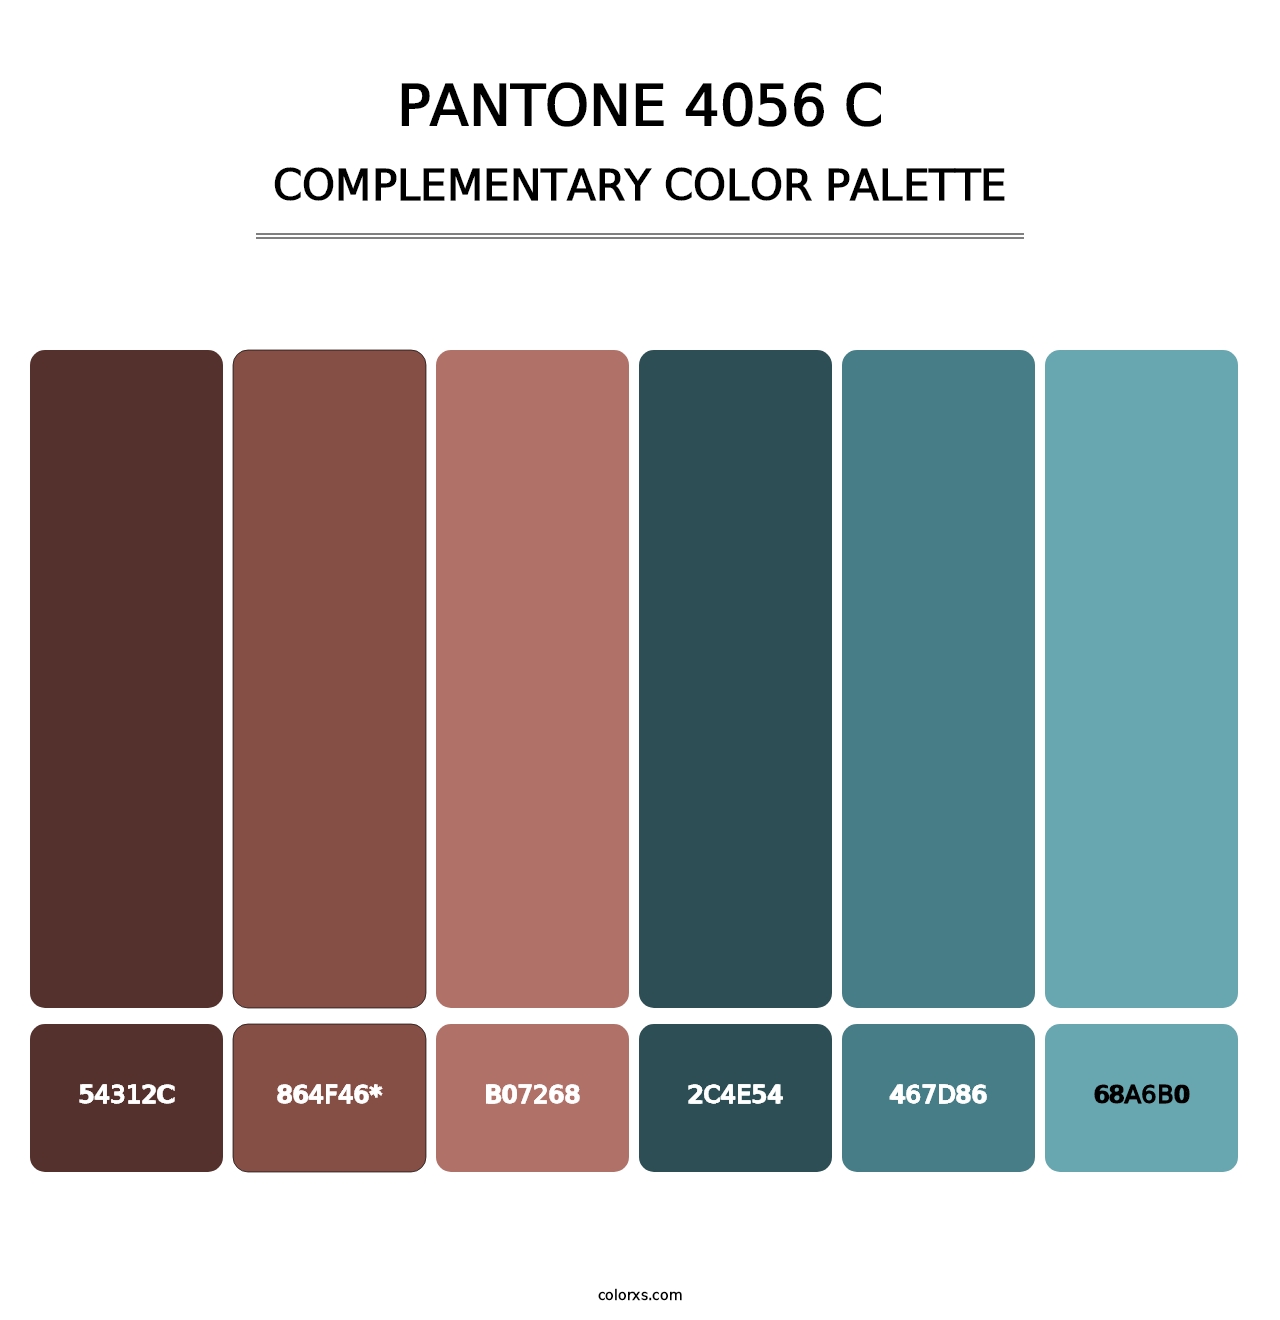 PANTONE 4056 C - Complementary Color Palette